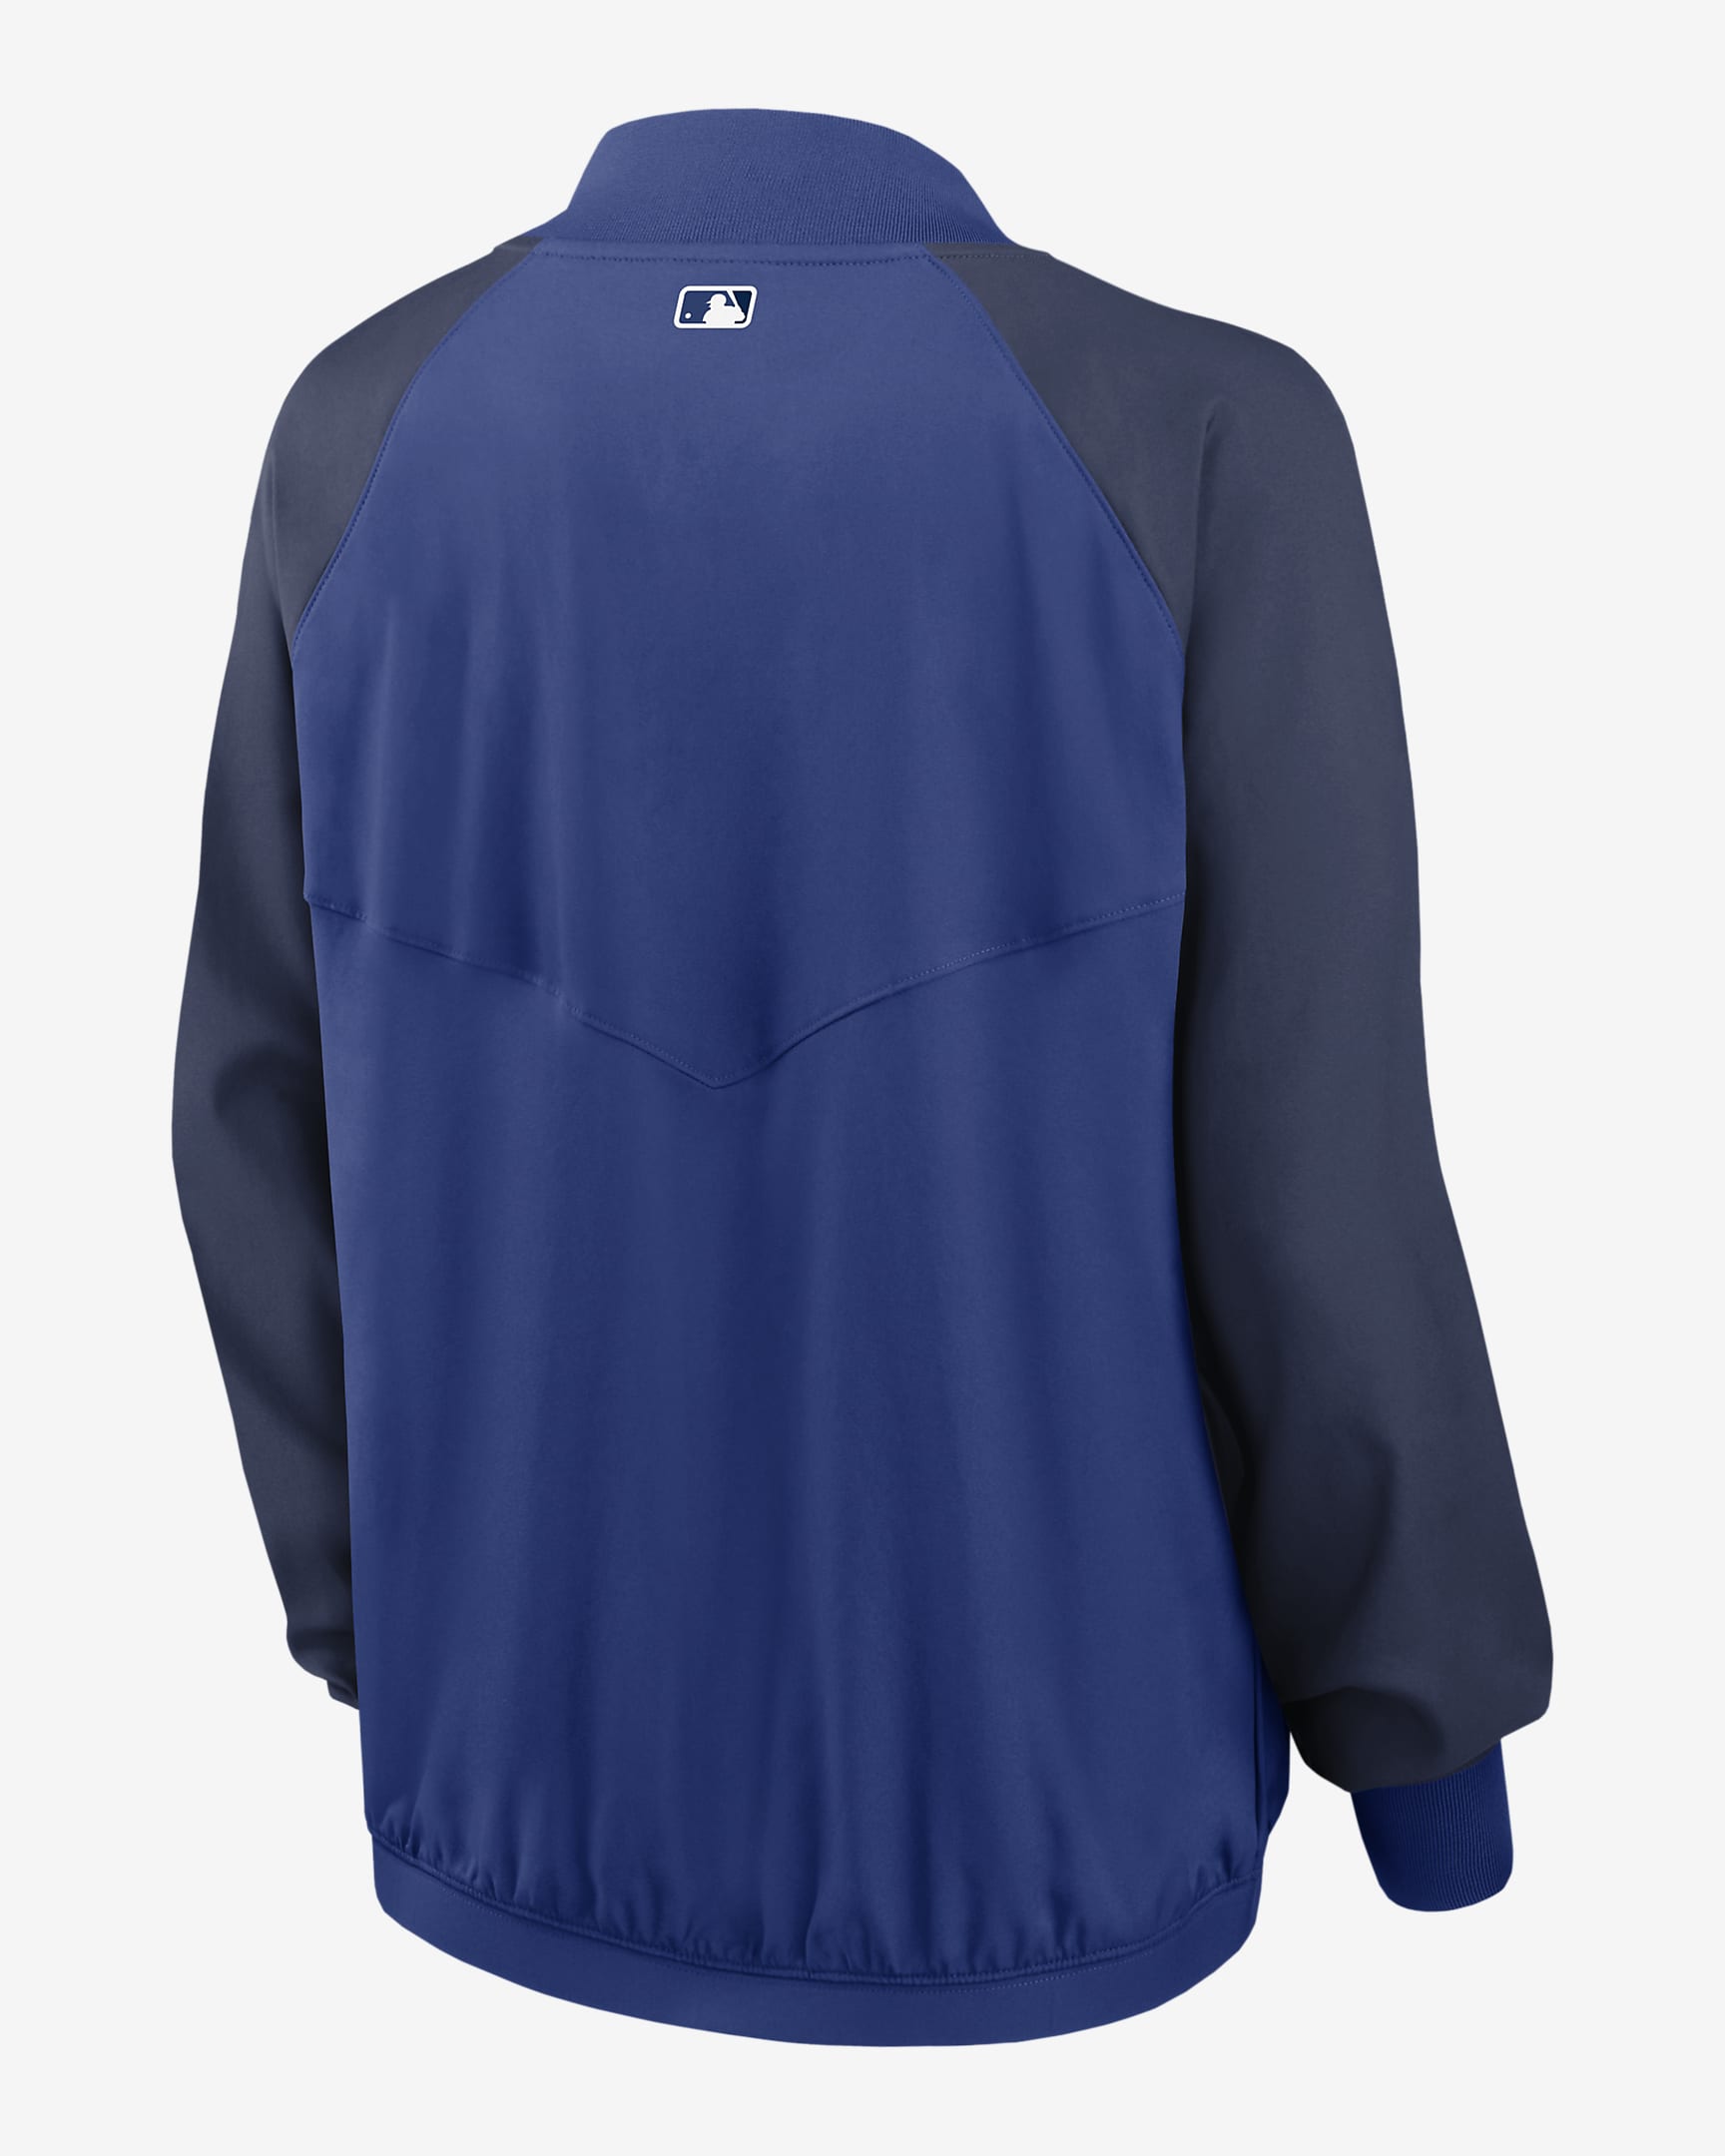 Nike Dri-FIT Team (MLB Toronto Blue Jays) Women's Full-Zip Jacket. Nike.com